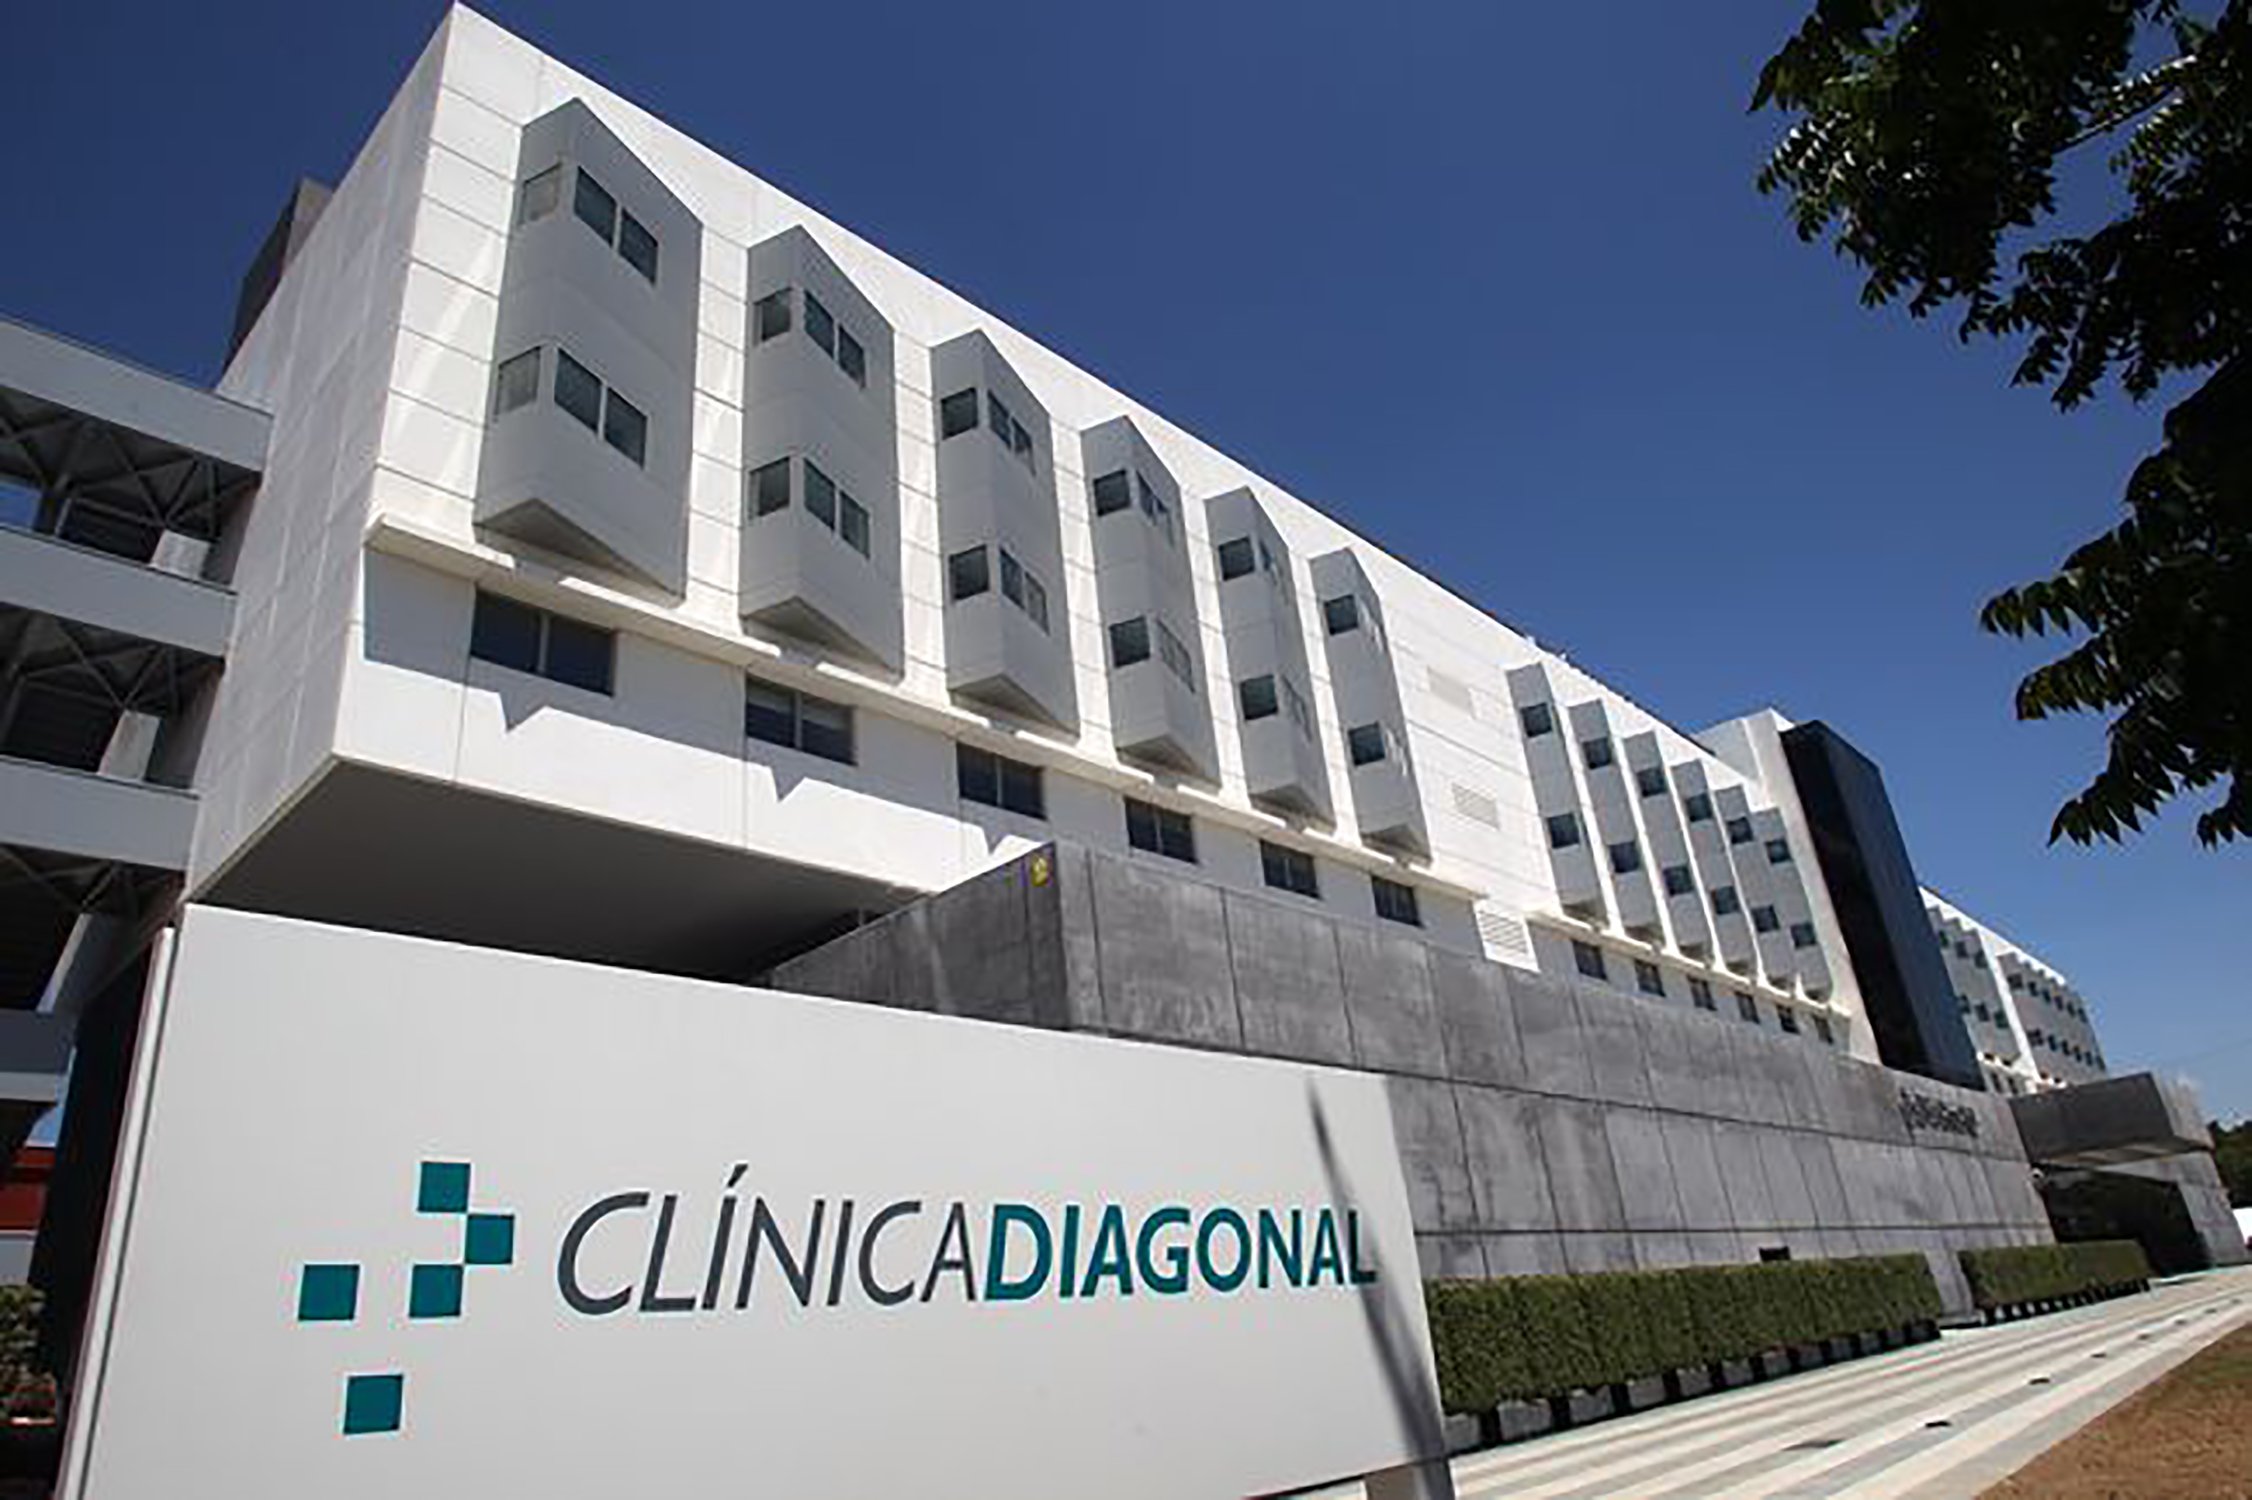 Clinica Diagonal